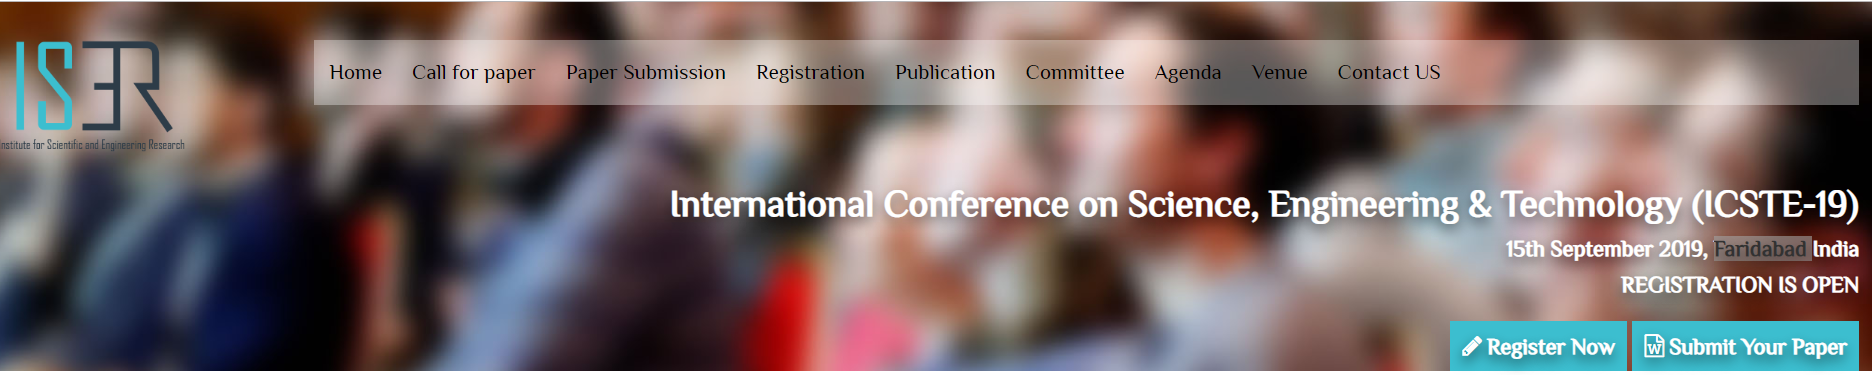 International Conference on Science, Engineering & Technology  (ICSTE-19), Faridabad, Haryana, India